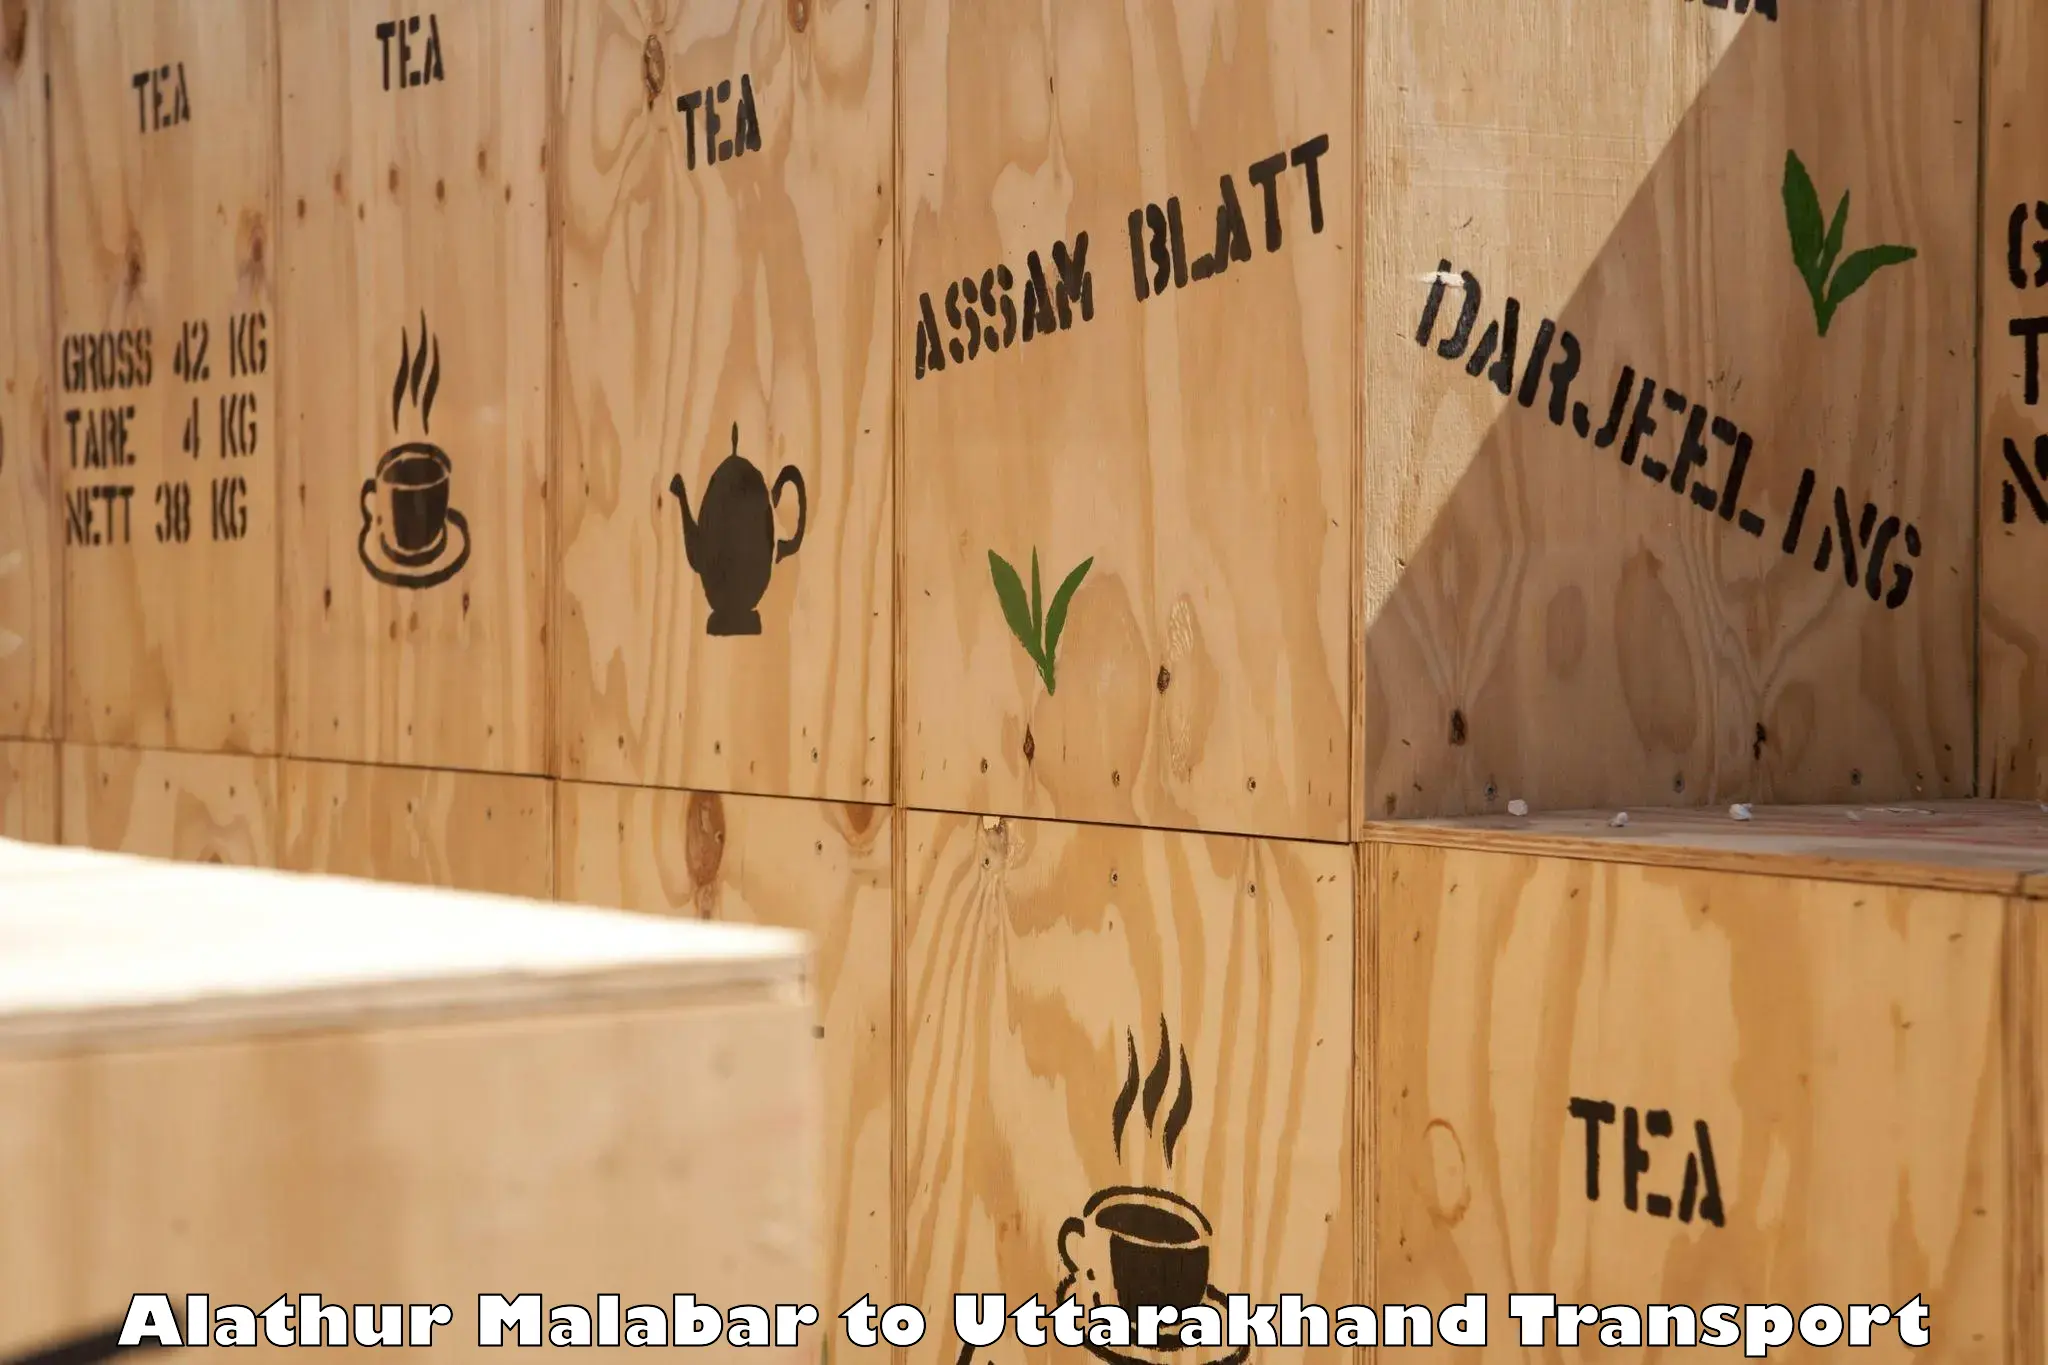 Lorry transport service Alathur Malabar to Kashipur